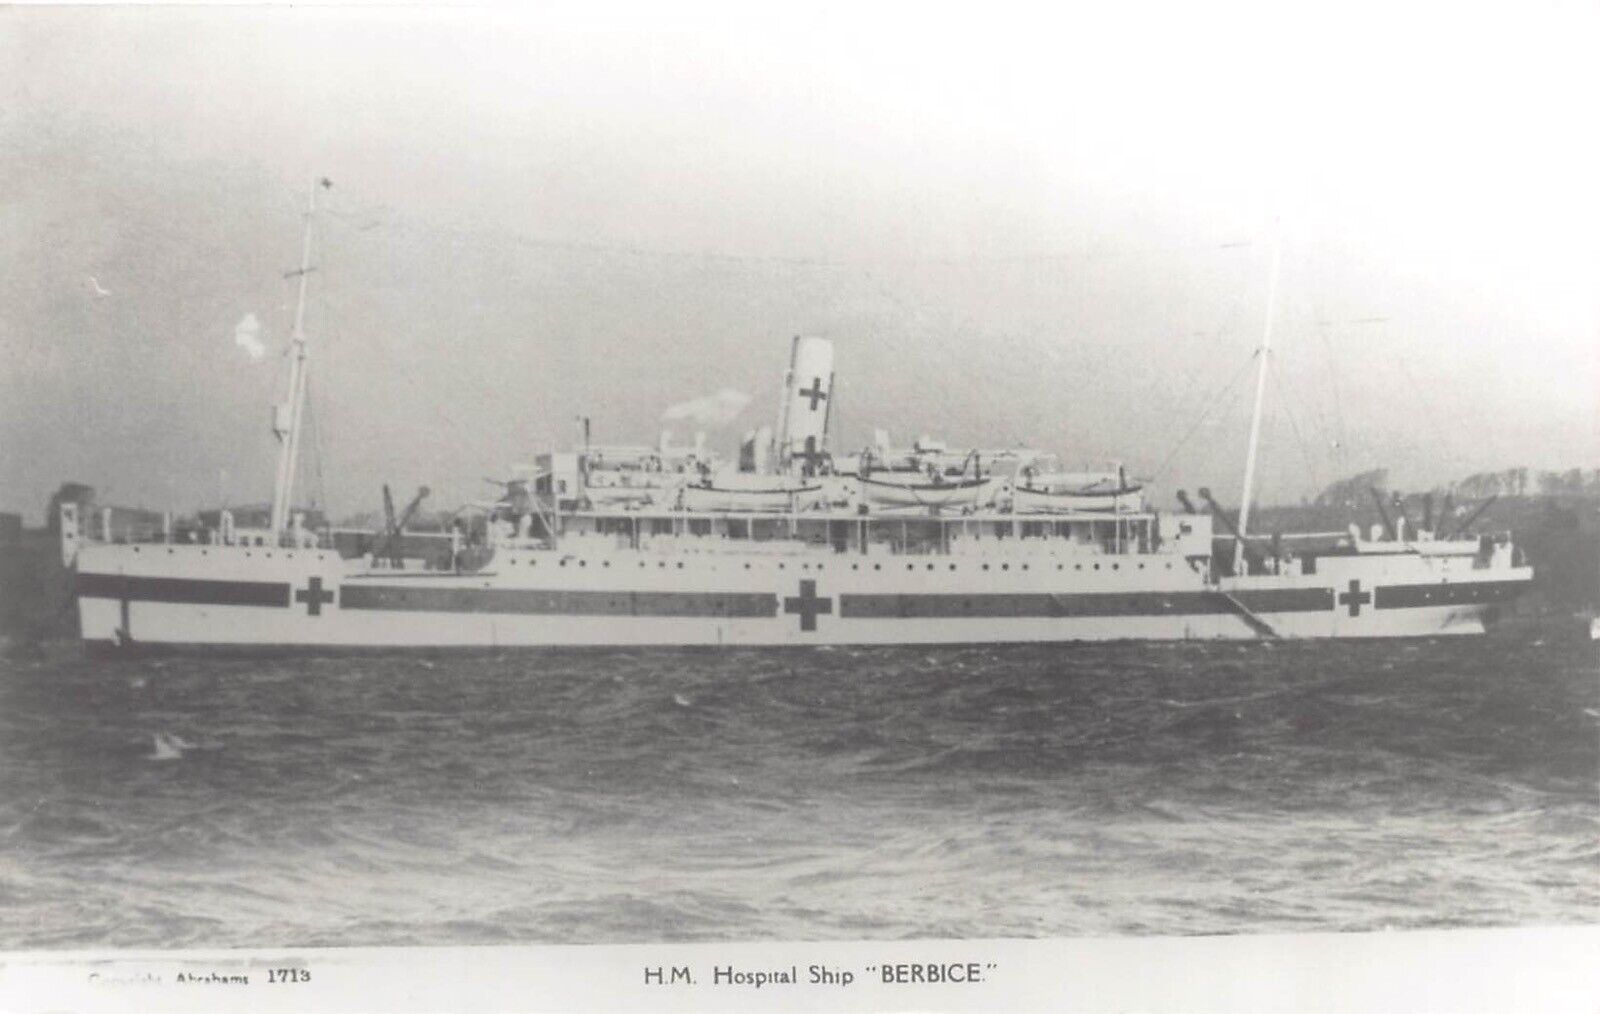 H.M Hospital Ship Berbice Cargo Ship Photograph Postcard Size repro